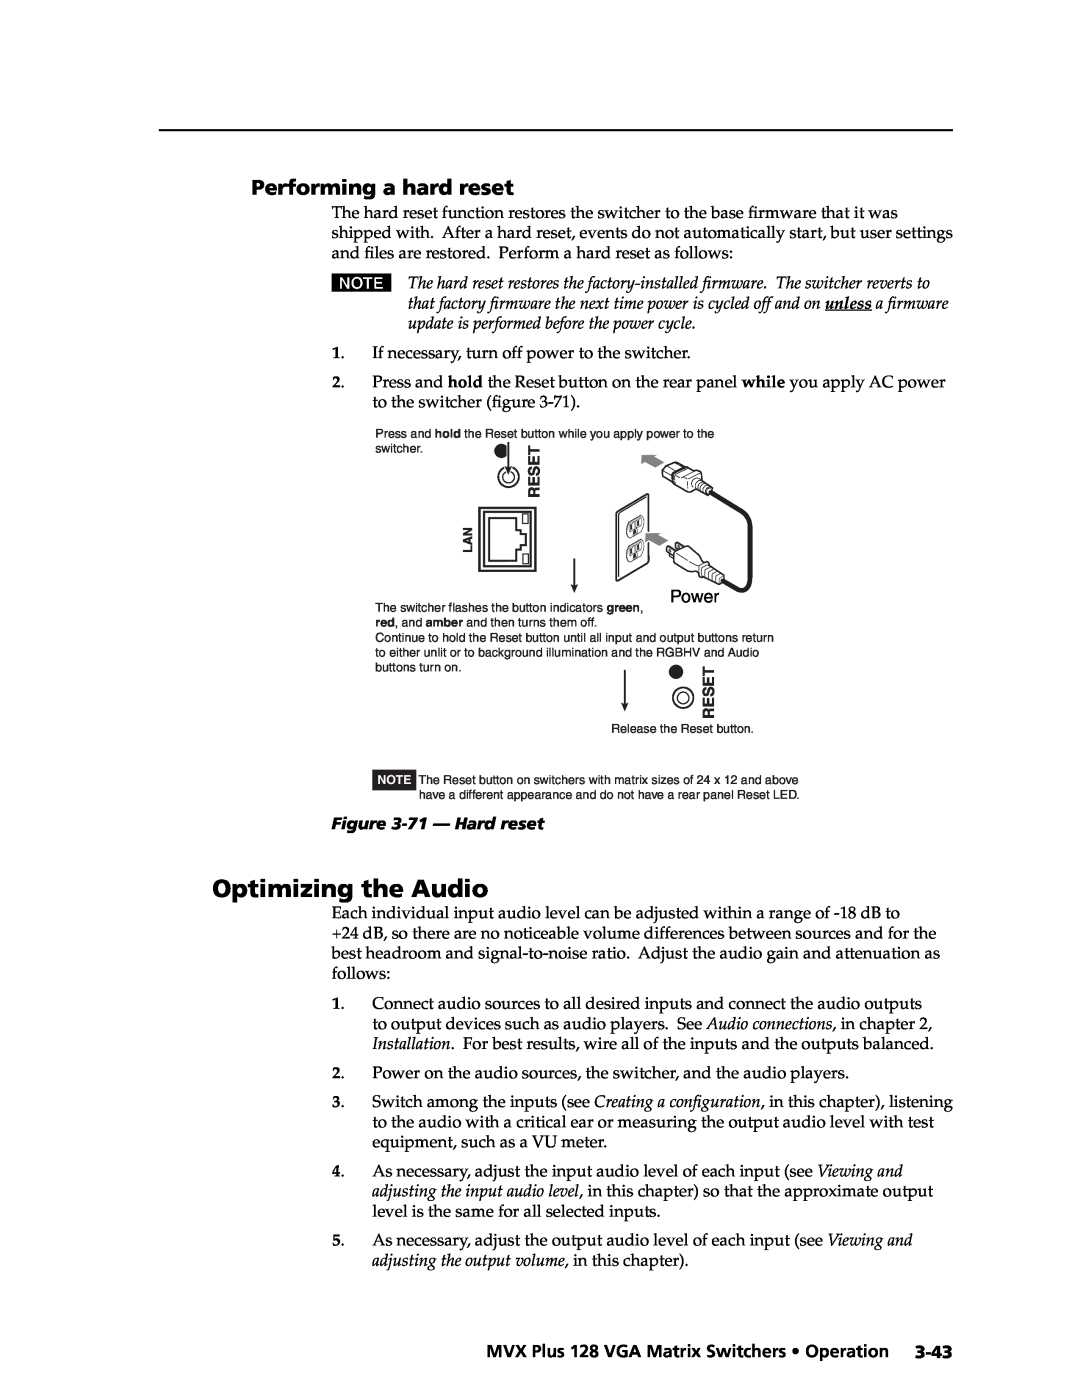 Extron electronic MVX PLUS 128 manual Optimizing the Audio, Performing a hard reset, 71 - Hard reset 